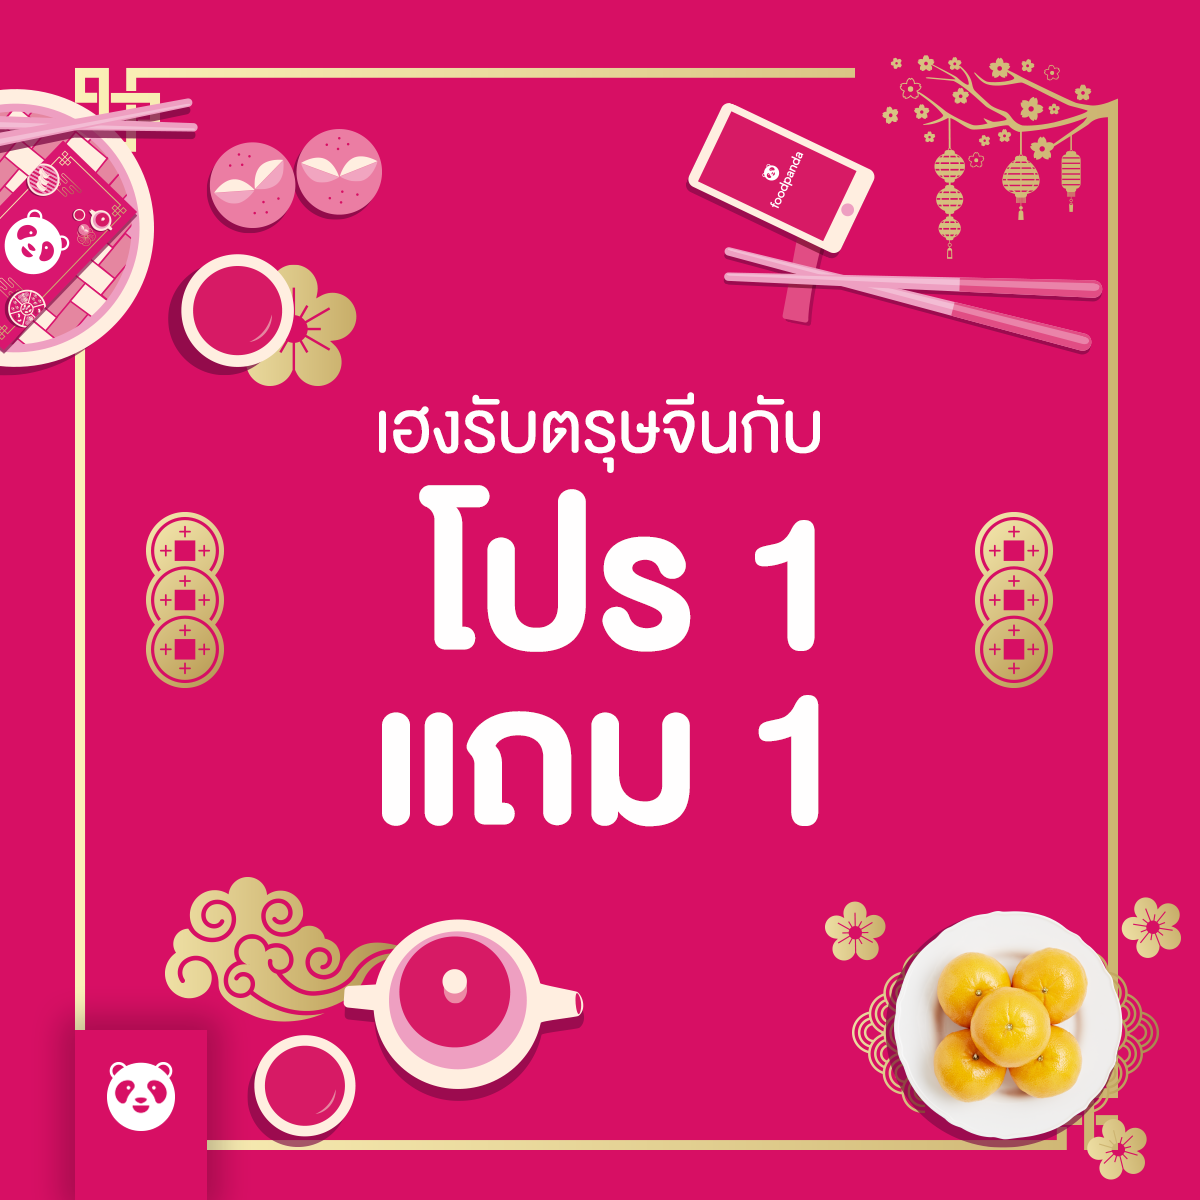 foodpanda promo codes in Thailand | March 2020 | foodpanda